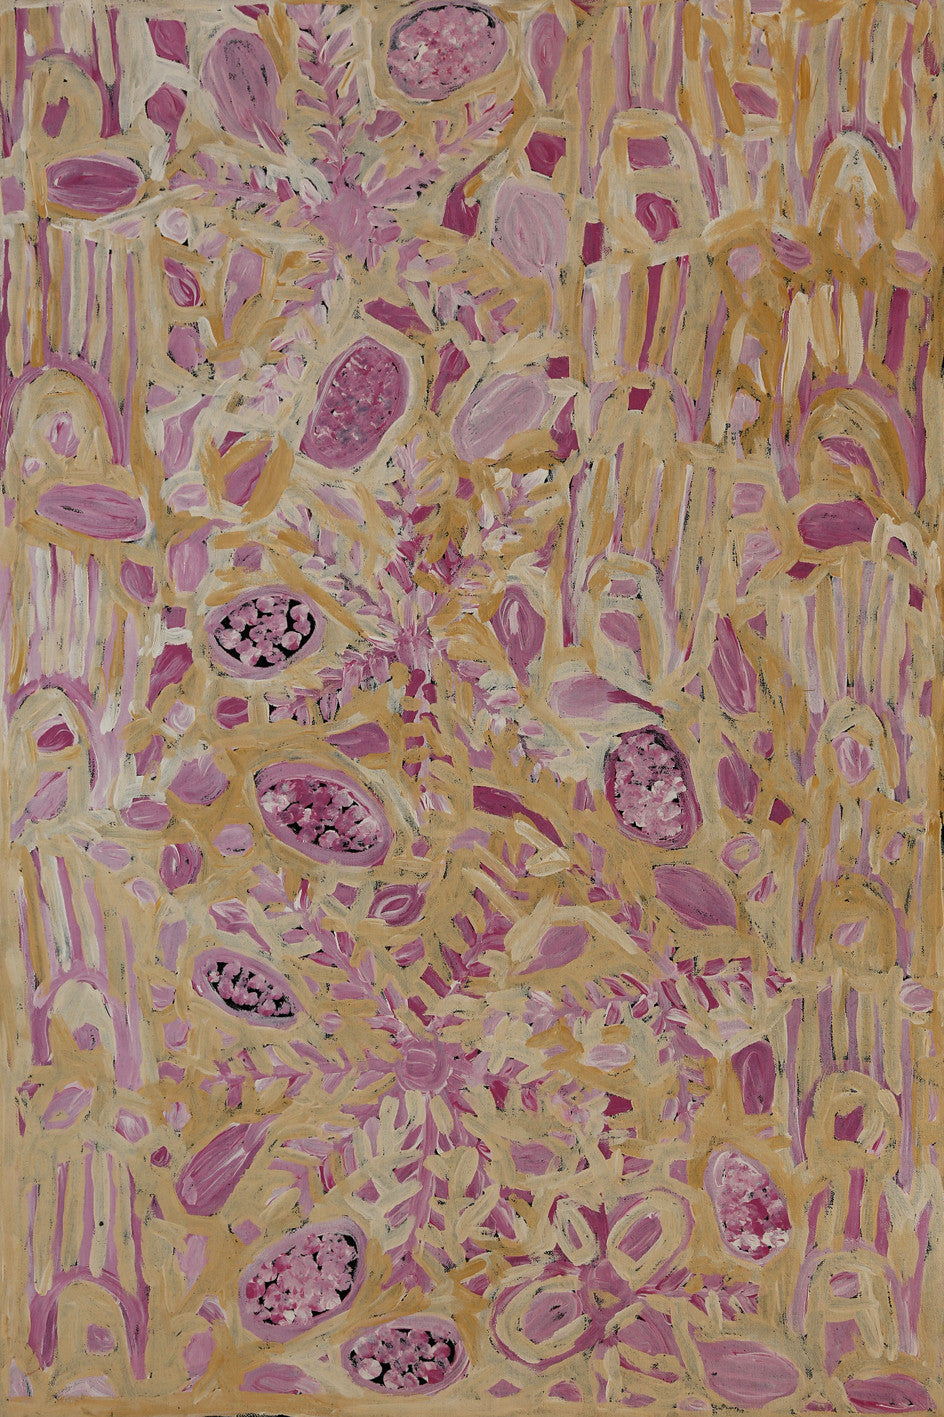 Maisie Bundey Petyarre, Painting 09B13, 2009, 61x90cm - Delmore Gallery